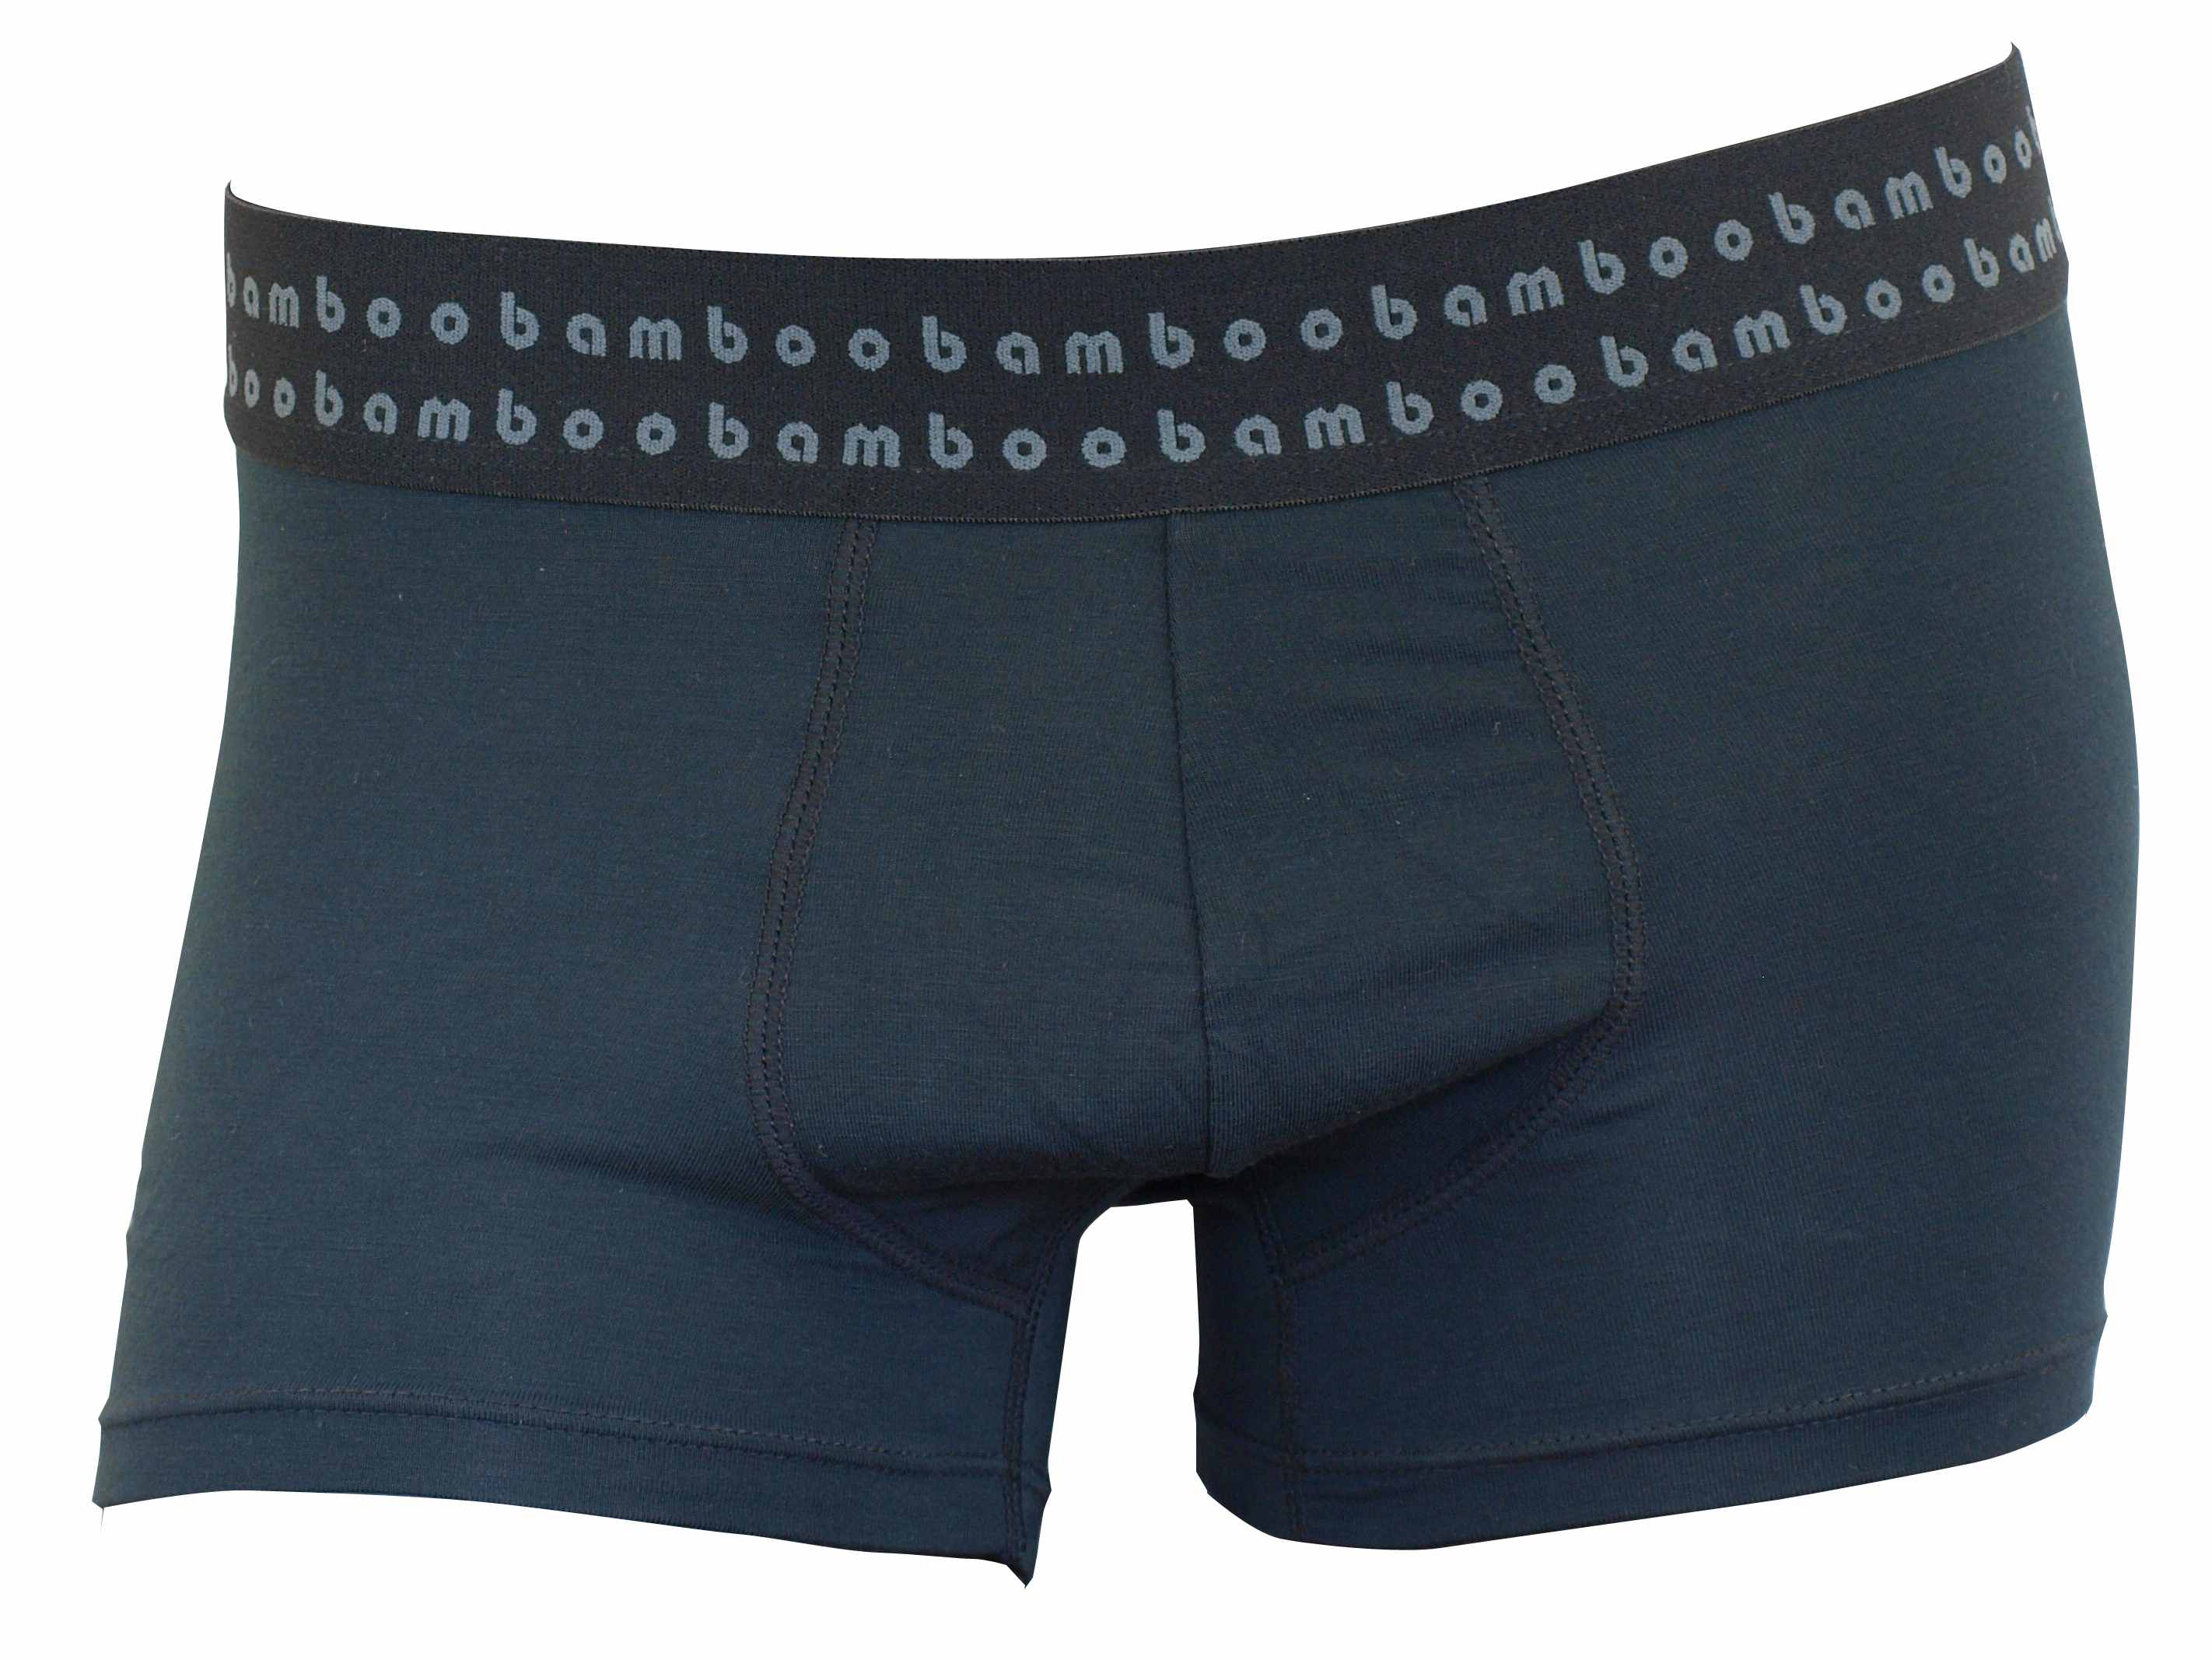 9 Amazing Bamboo Underwear Men for 2023